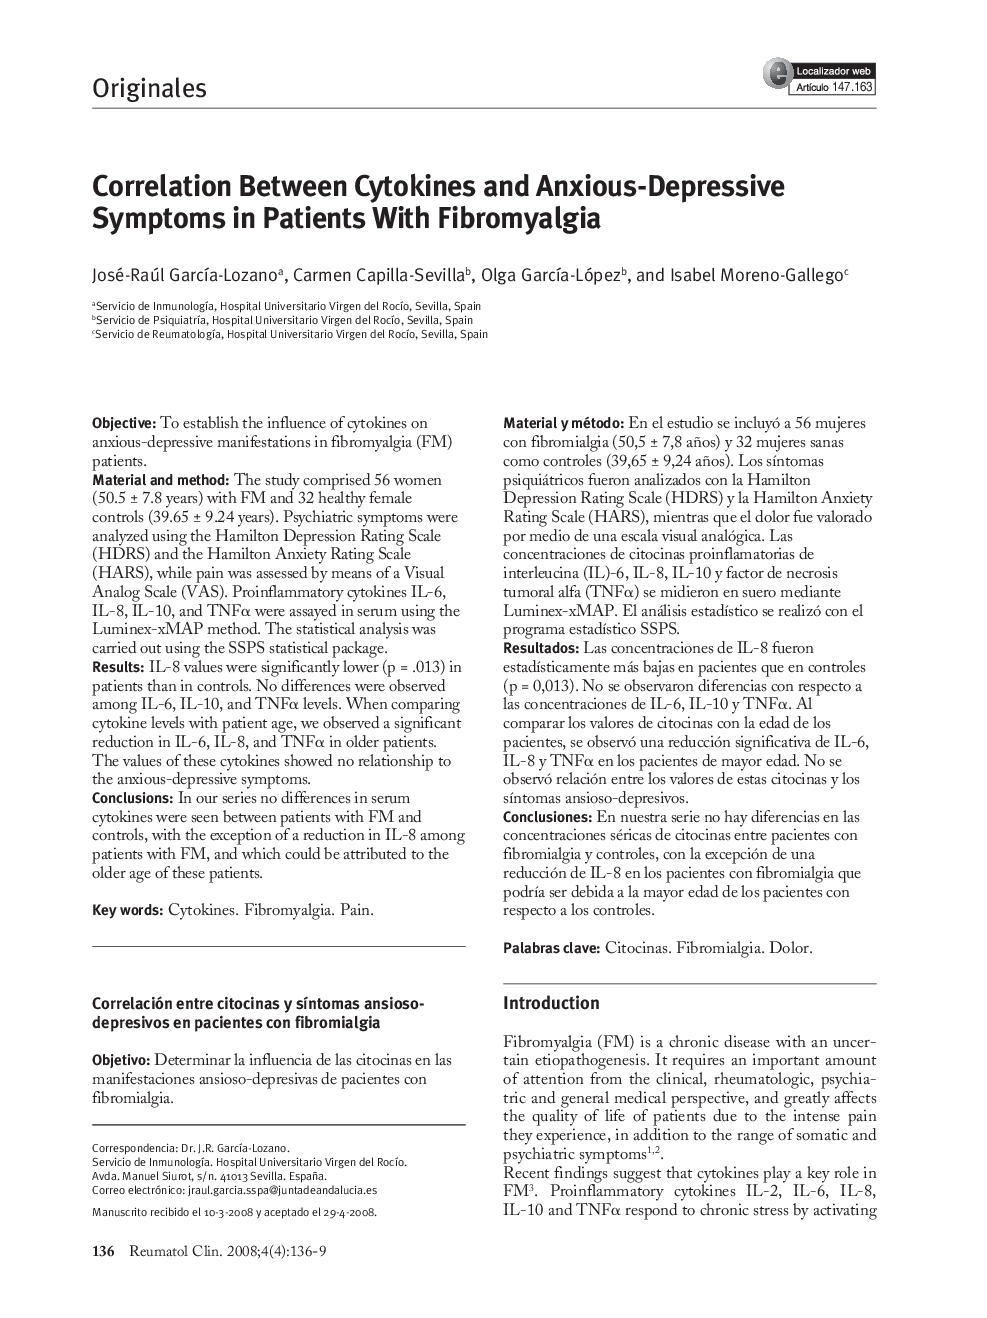 Correlation Between Cytokines and Anxious-Depressive Symptoms in Patients With Fibromyalgia